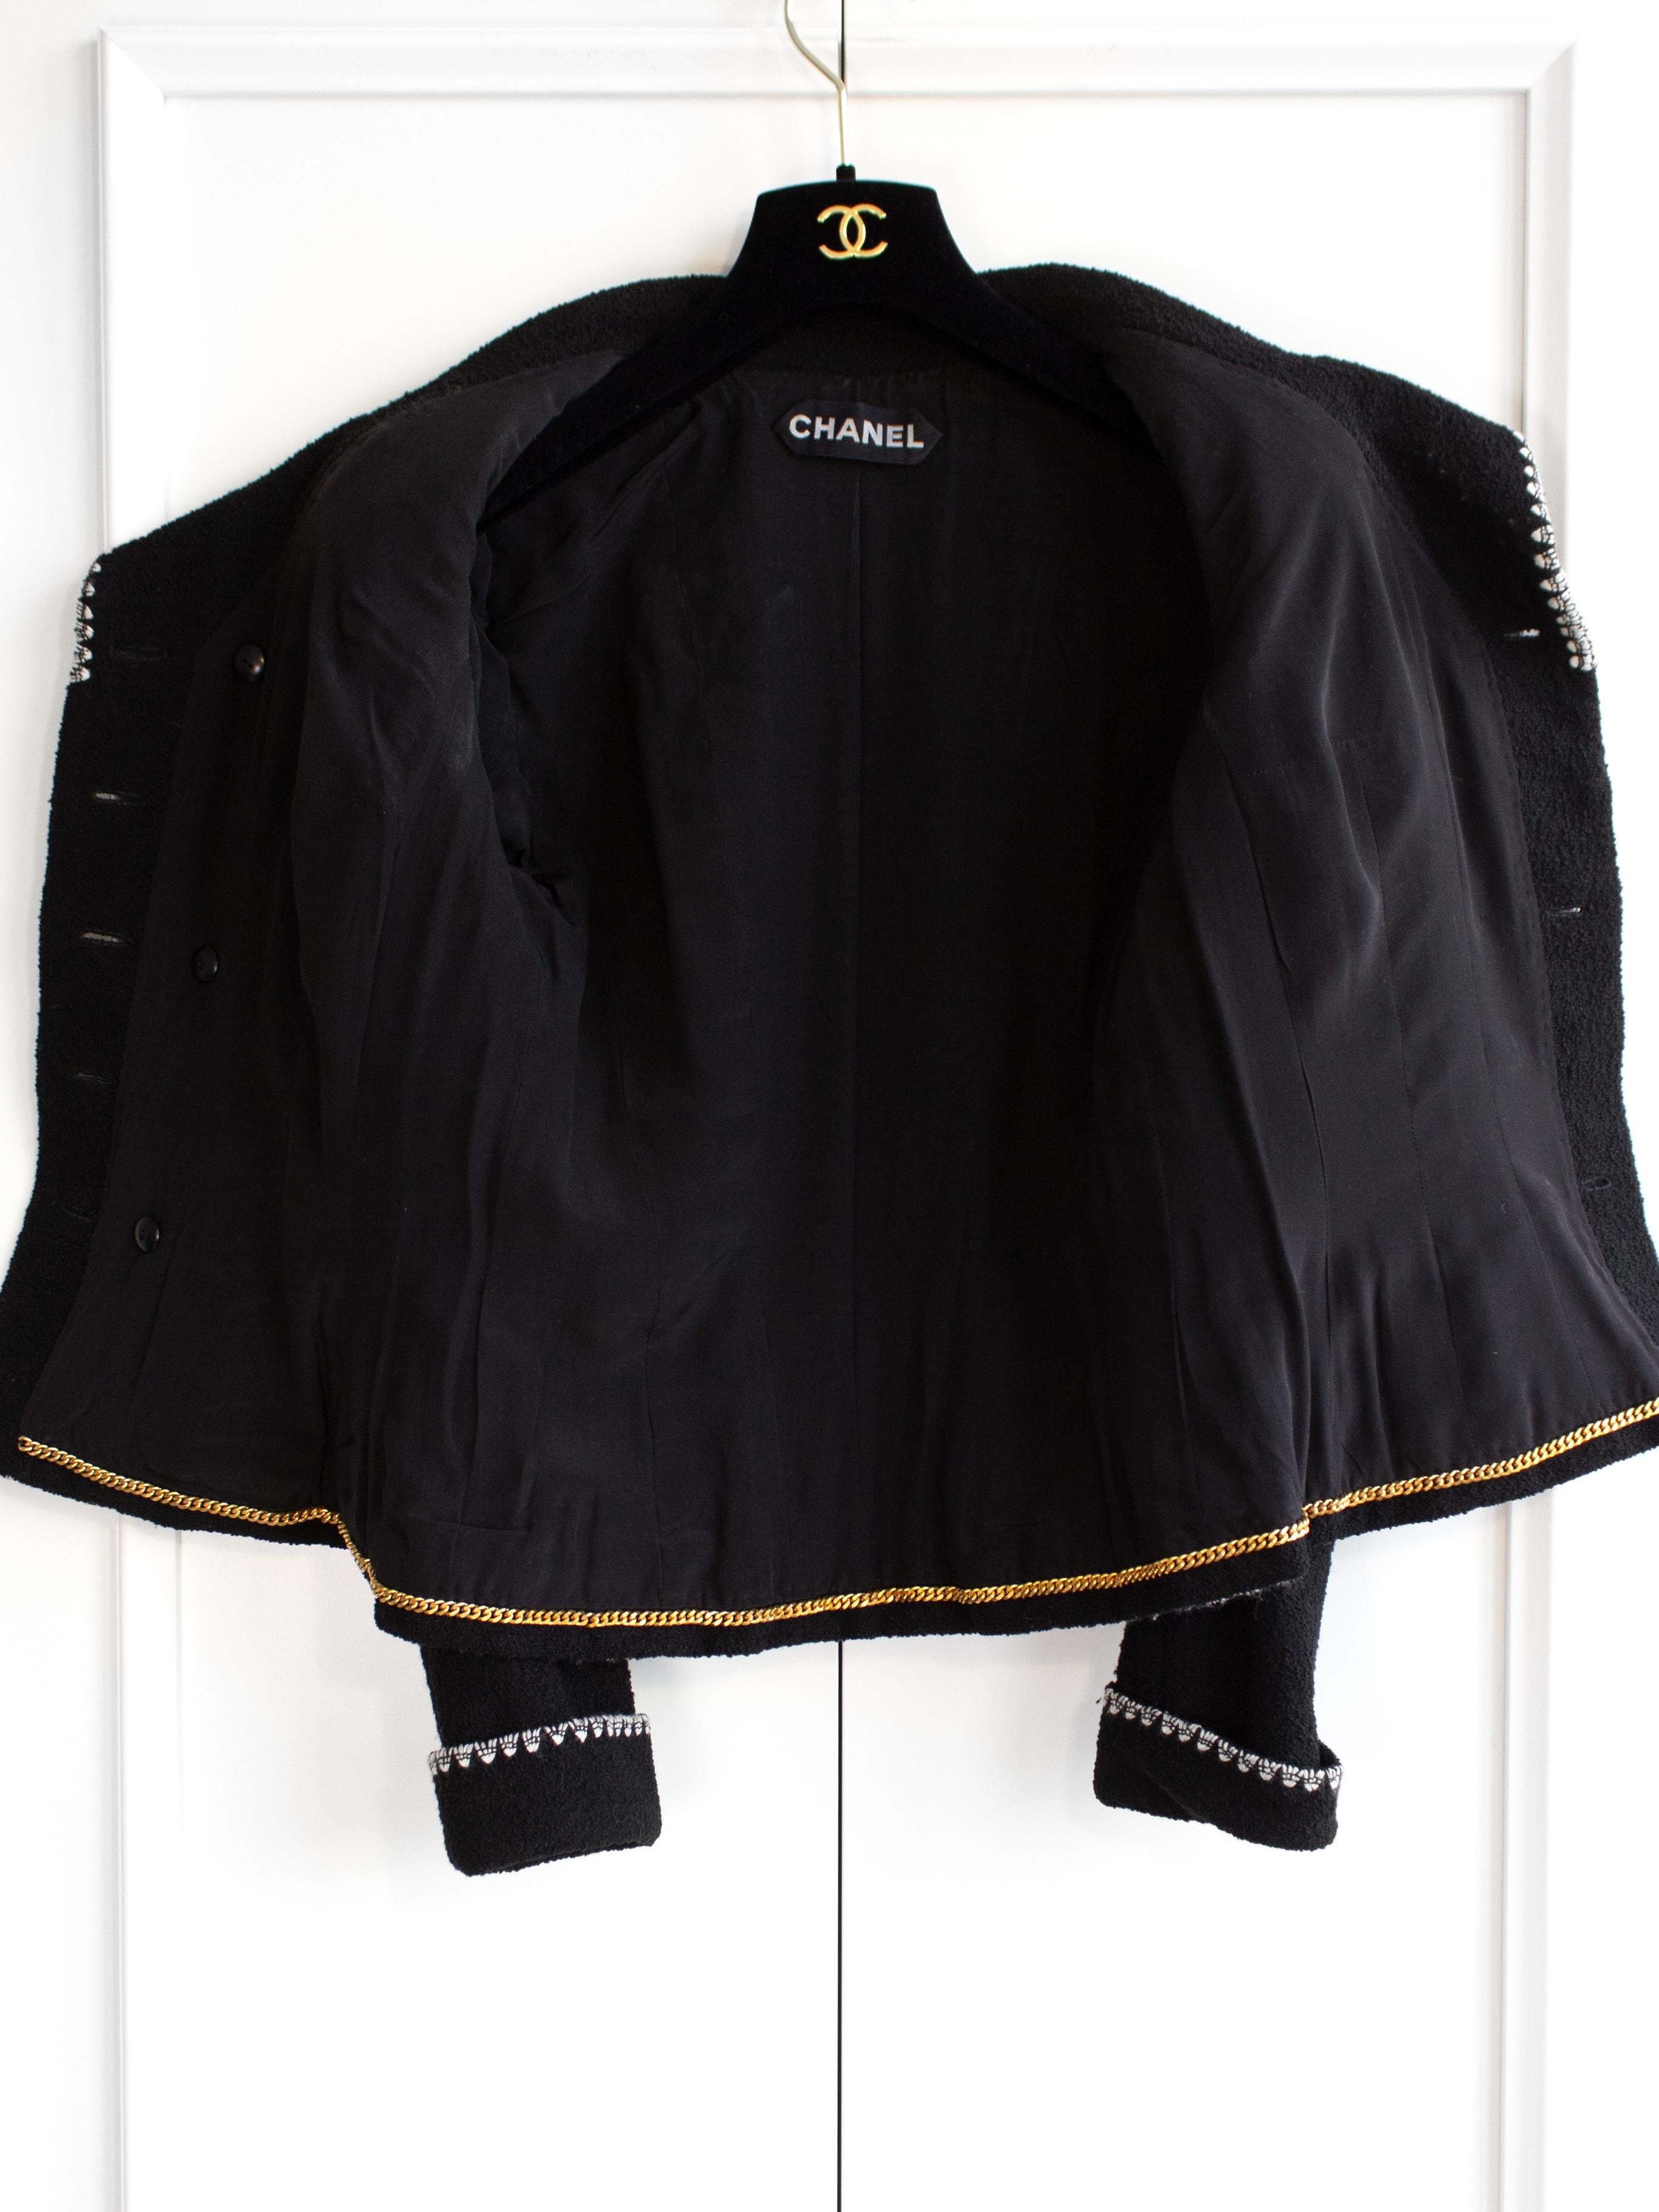 Chanel Vintage Haute Couture S/S 1995 Black White CC Tweed Jacket Skirt Suit 12